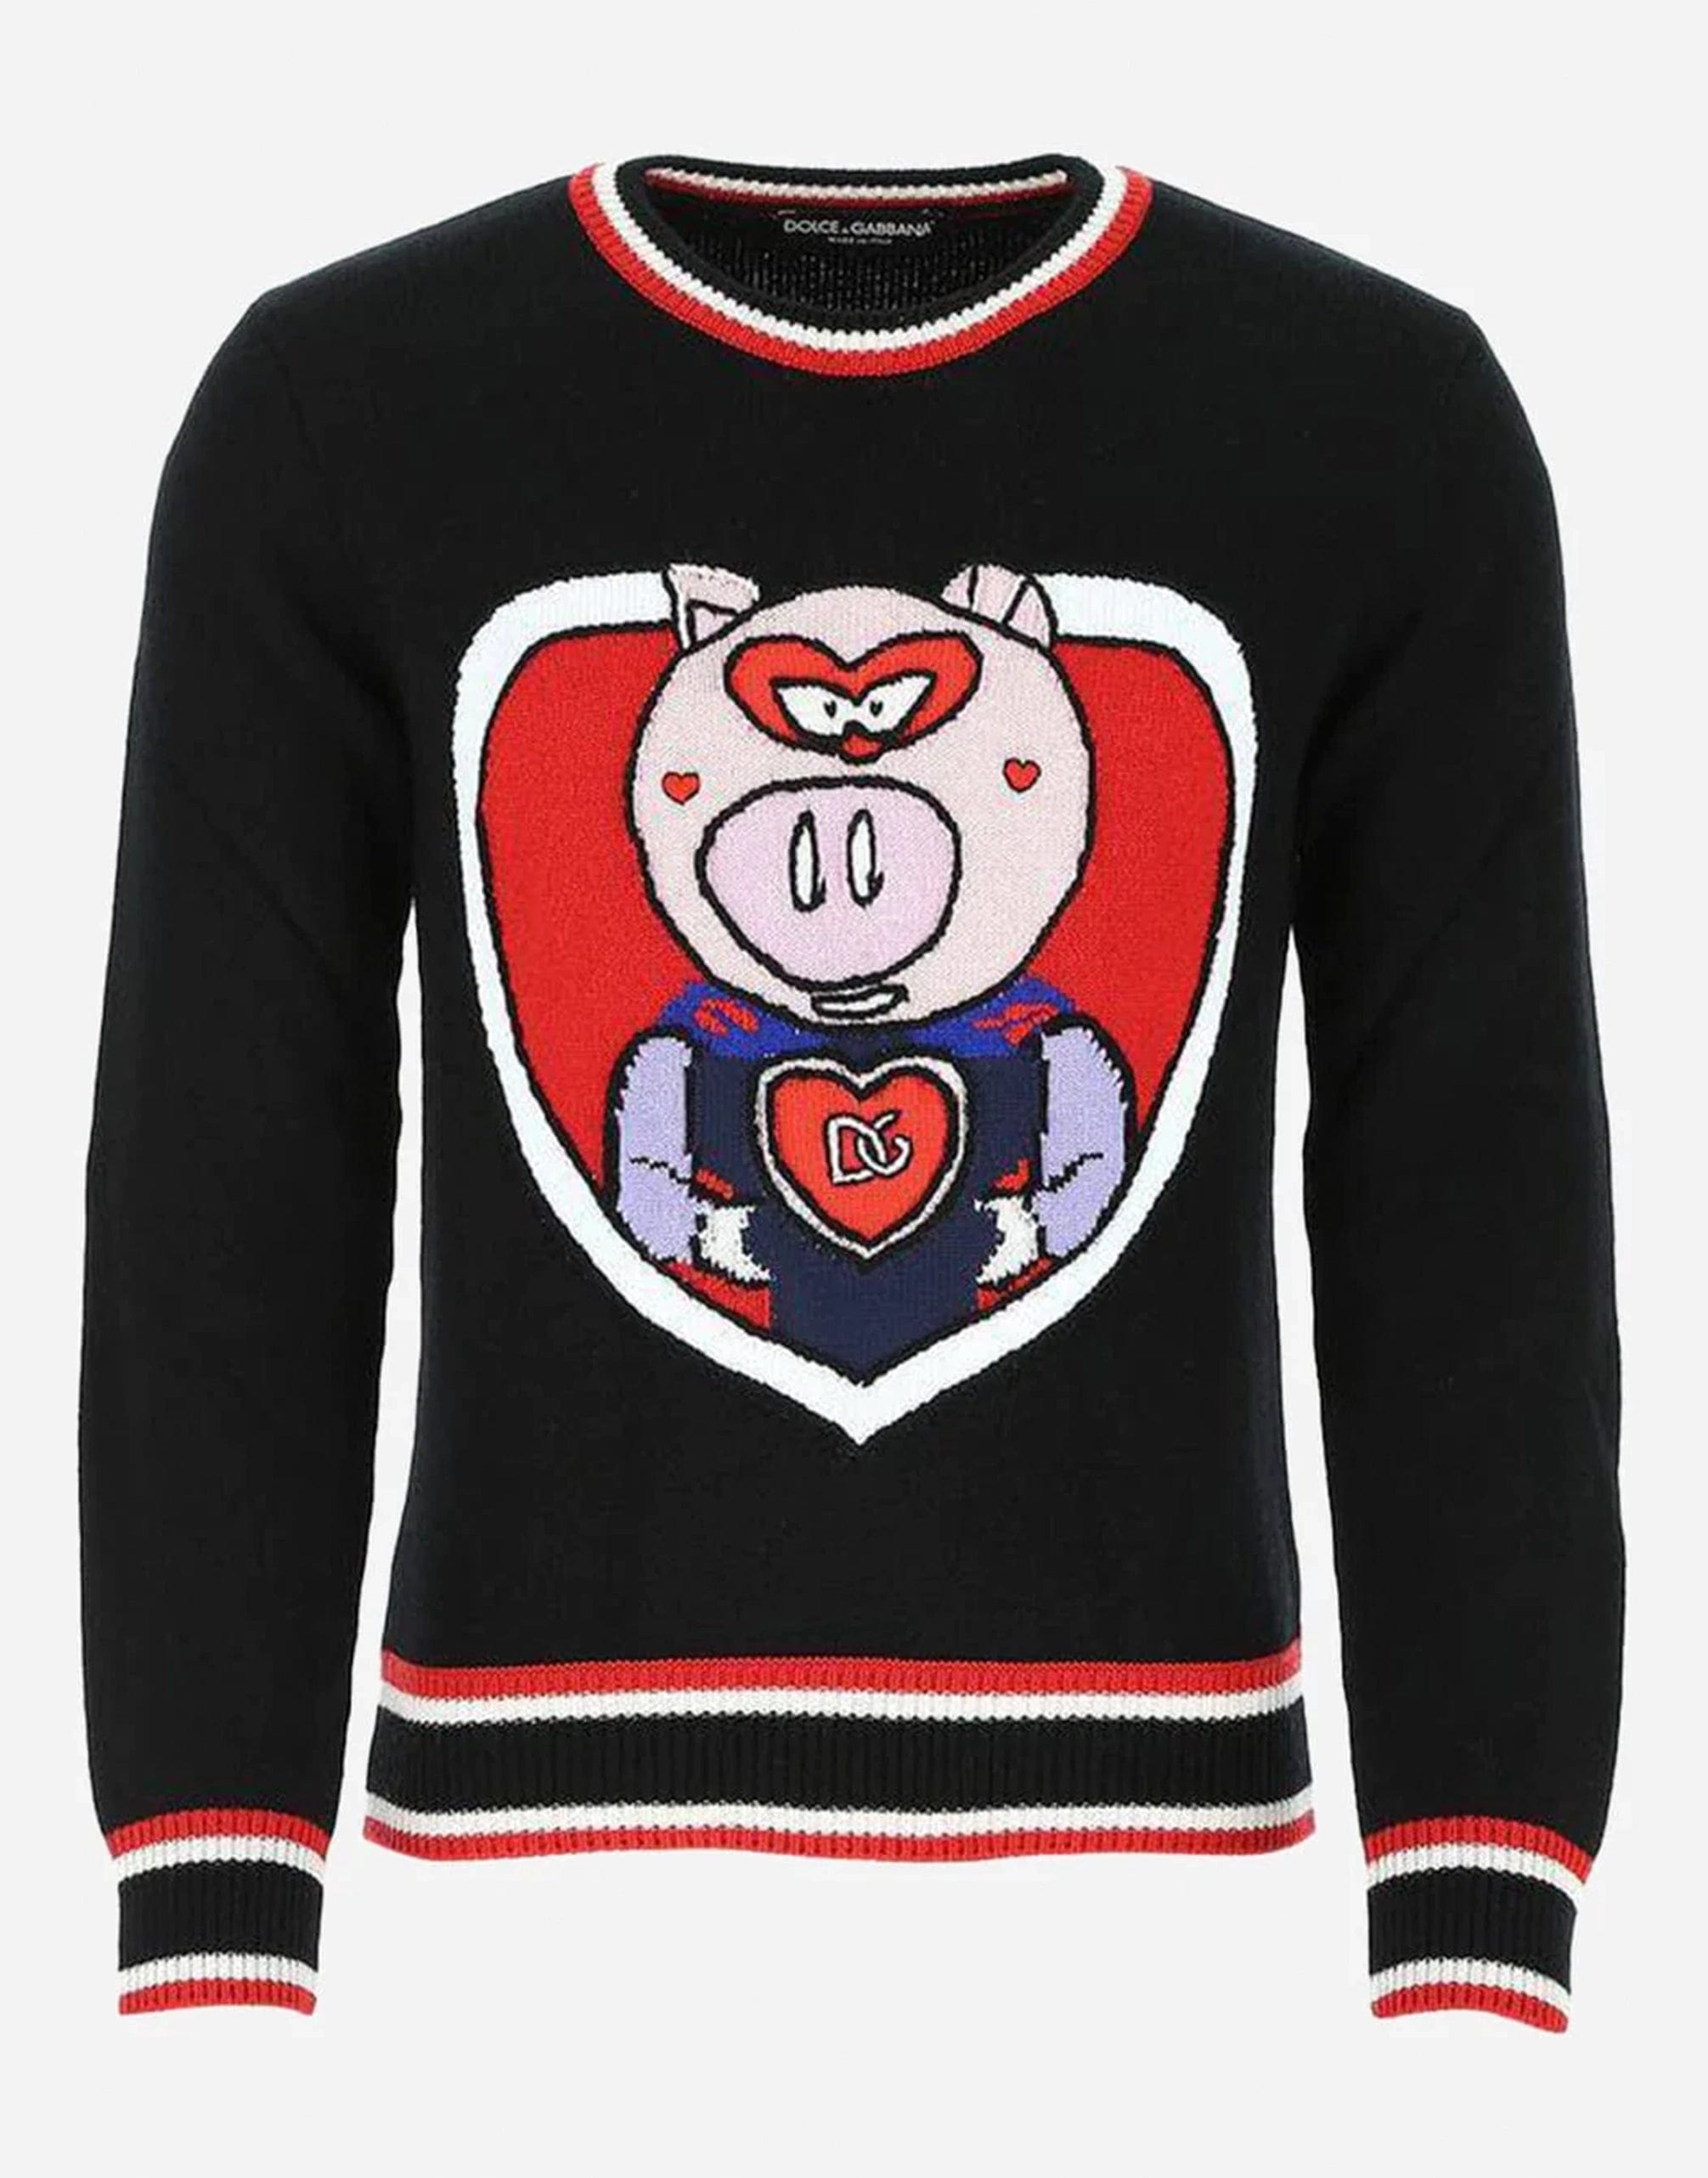 Dolce & Gabbana Pig Print Cashmere Sweater